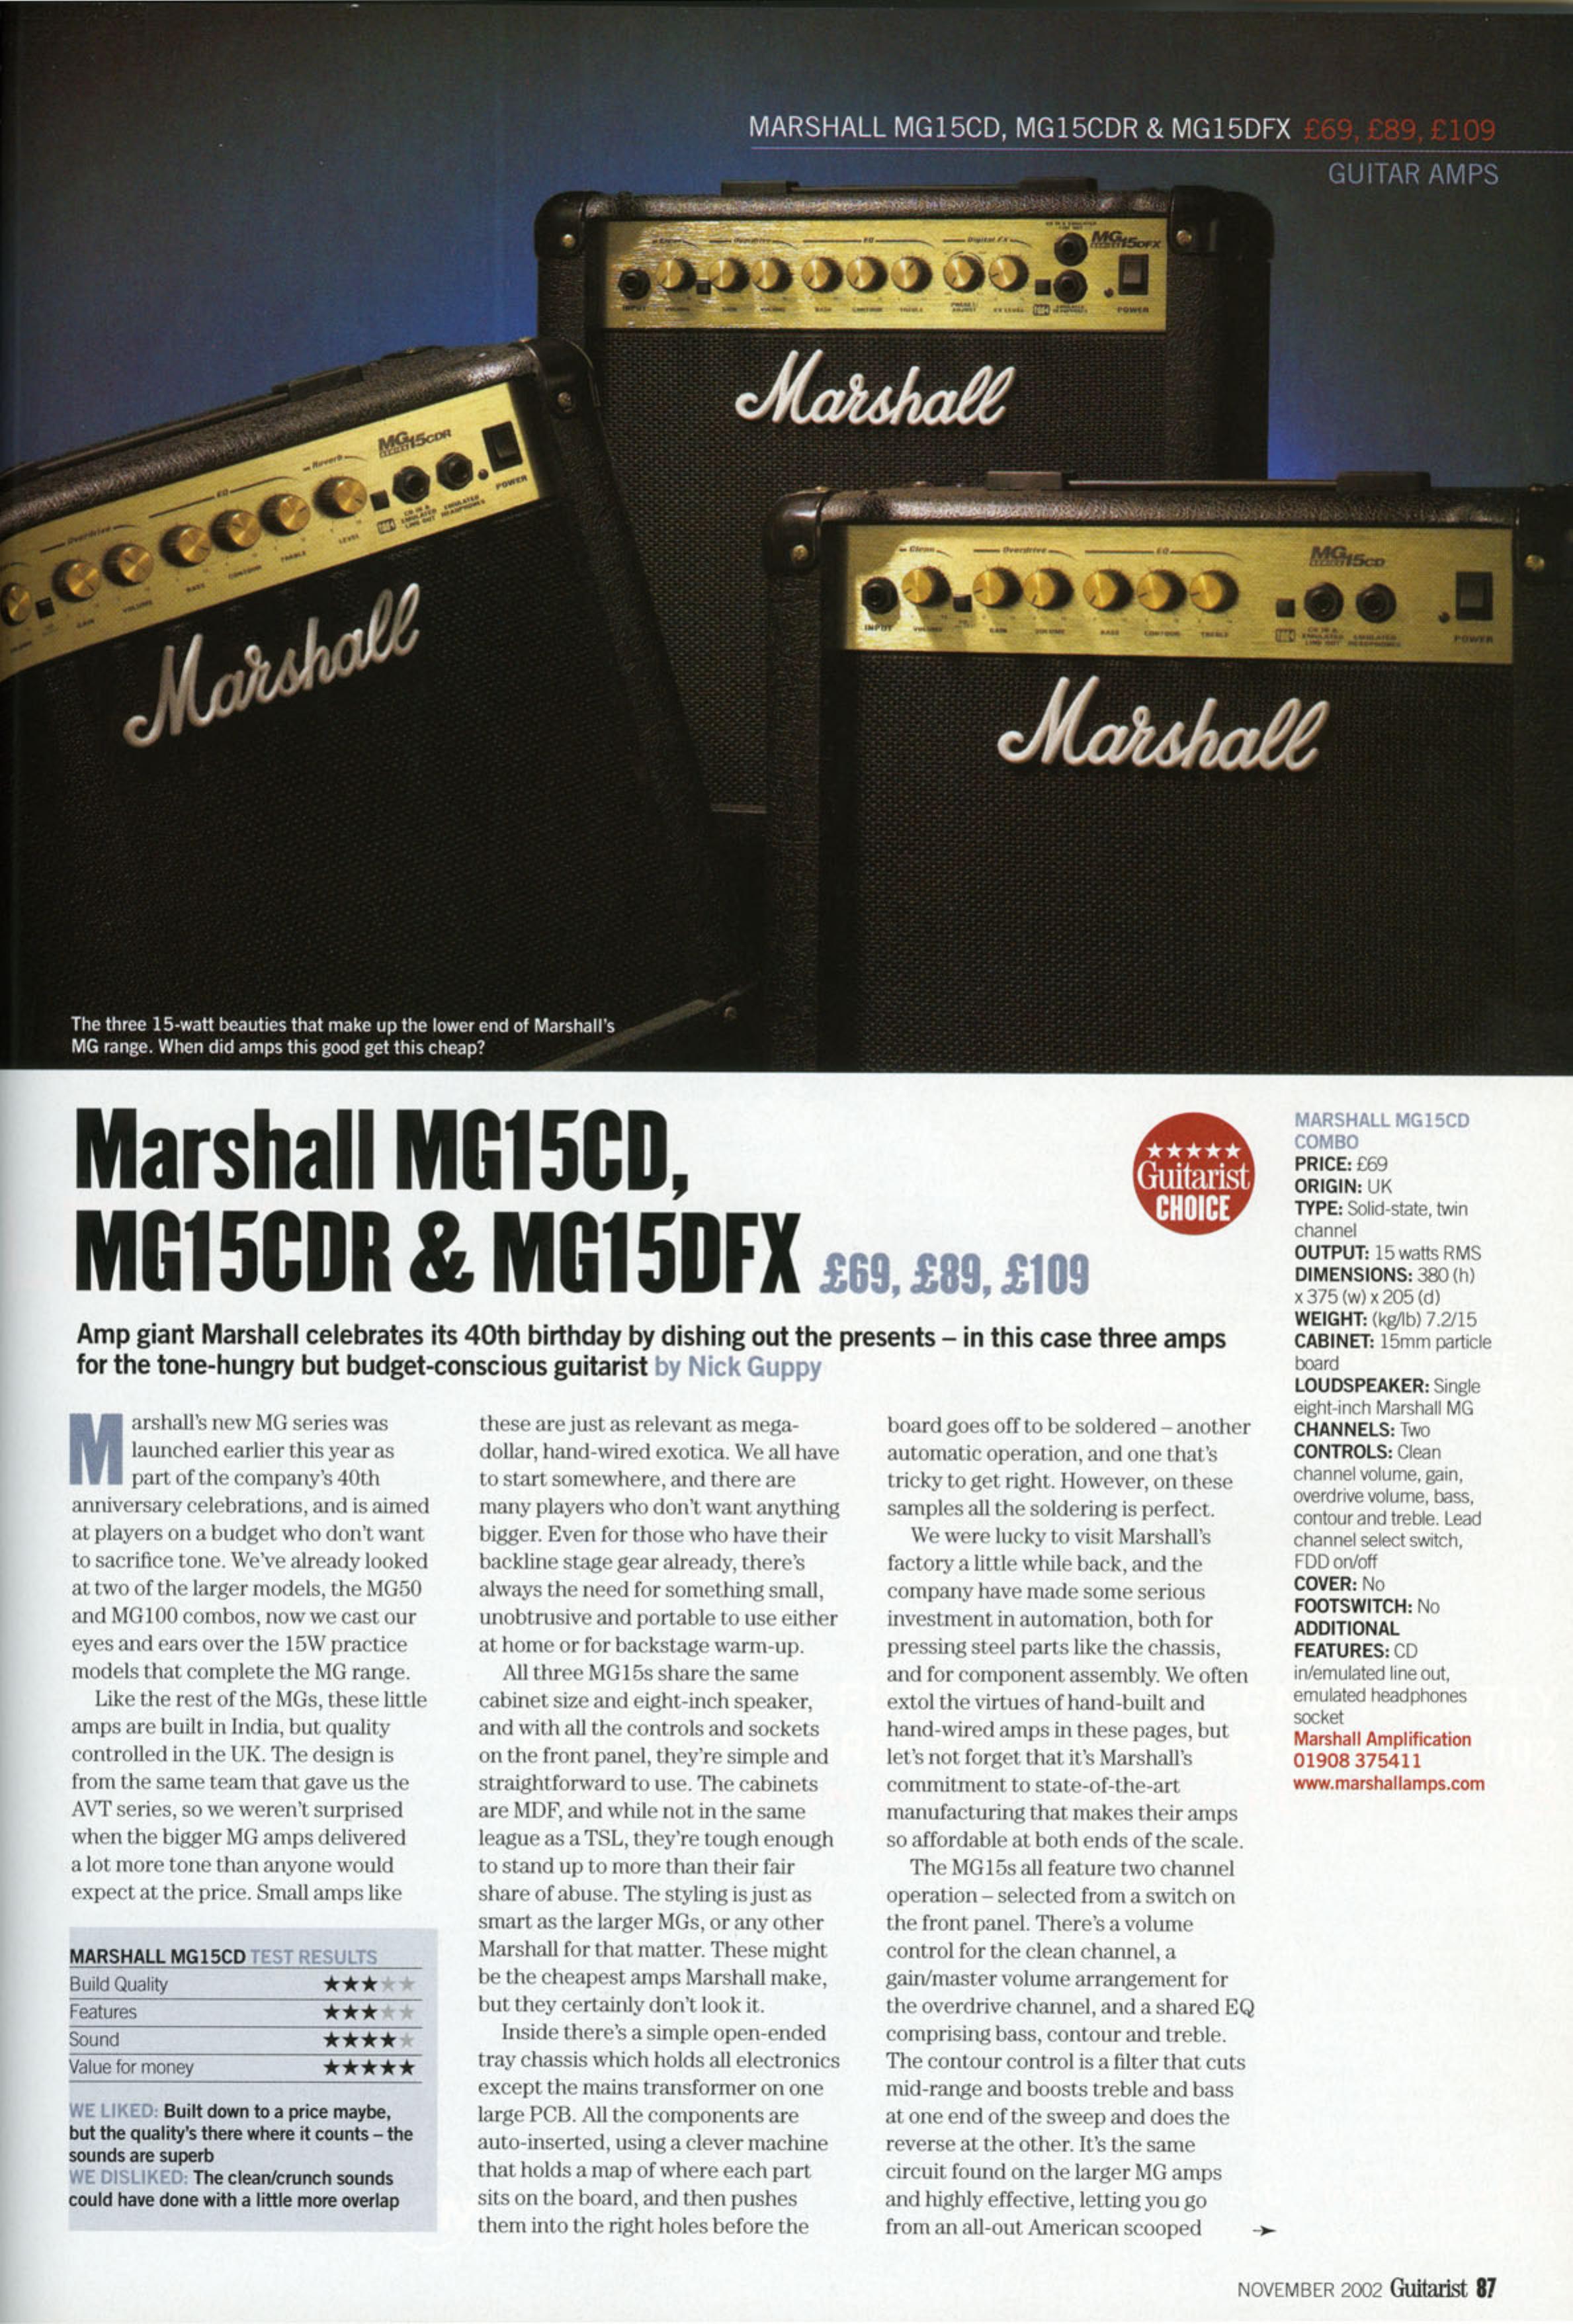 Marshall Amplification MG15CDR Musical Instrument Amplifier User Manual